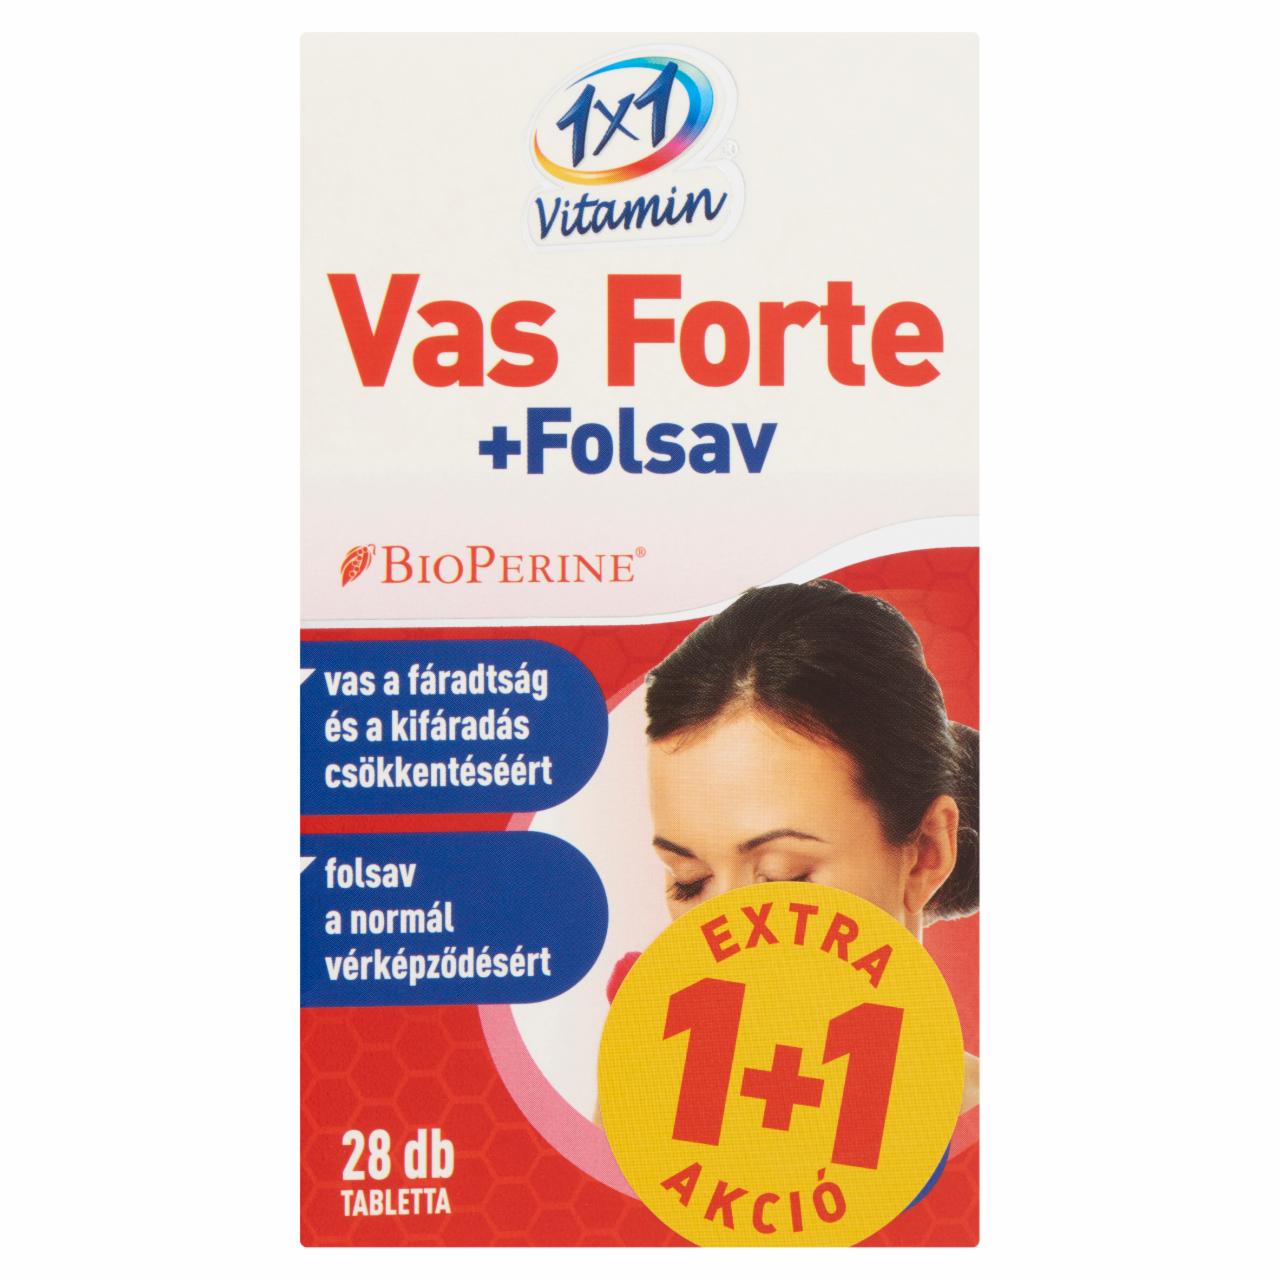 Képek - 1x1 Vitamin Vas Forte + C + Folsav étrend-kiegészítő filmtabletta 2 x 28 db